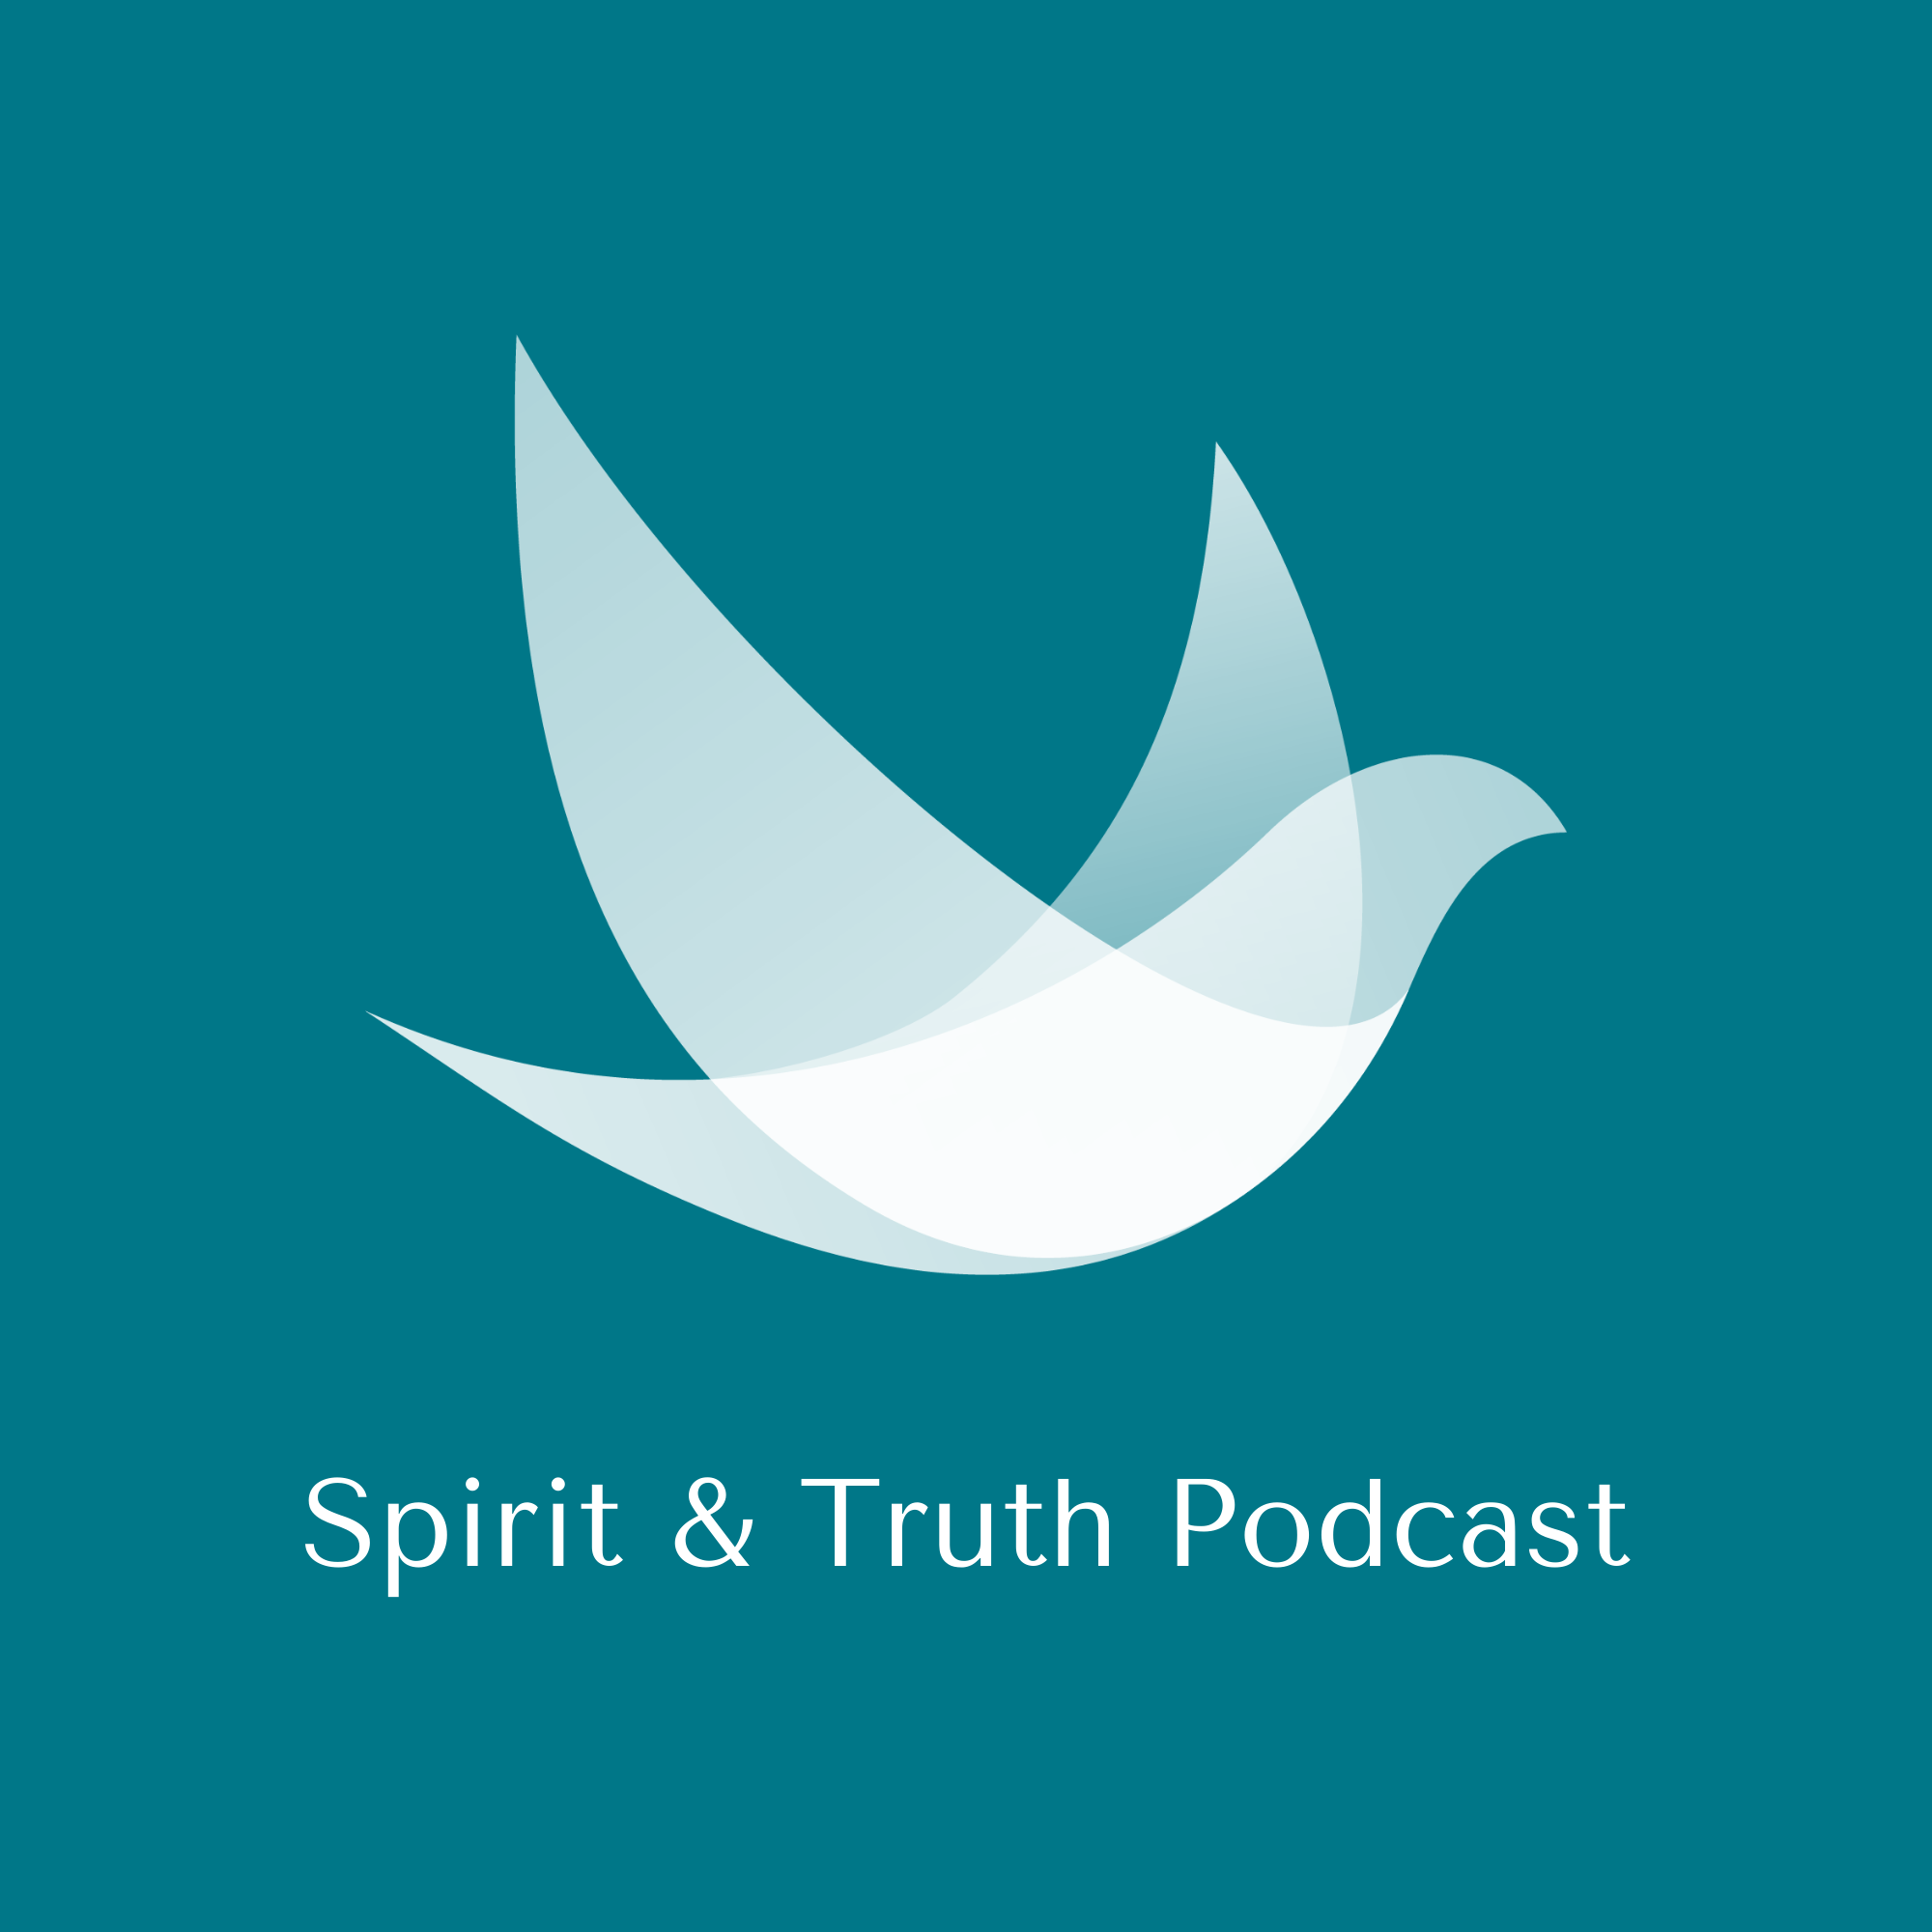 Spirit & Truth Podcast